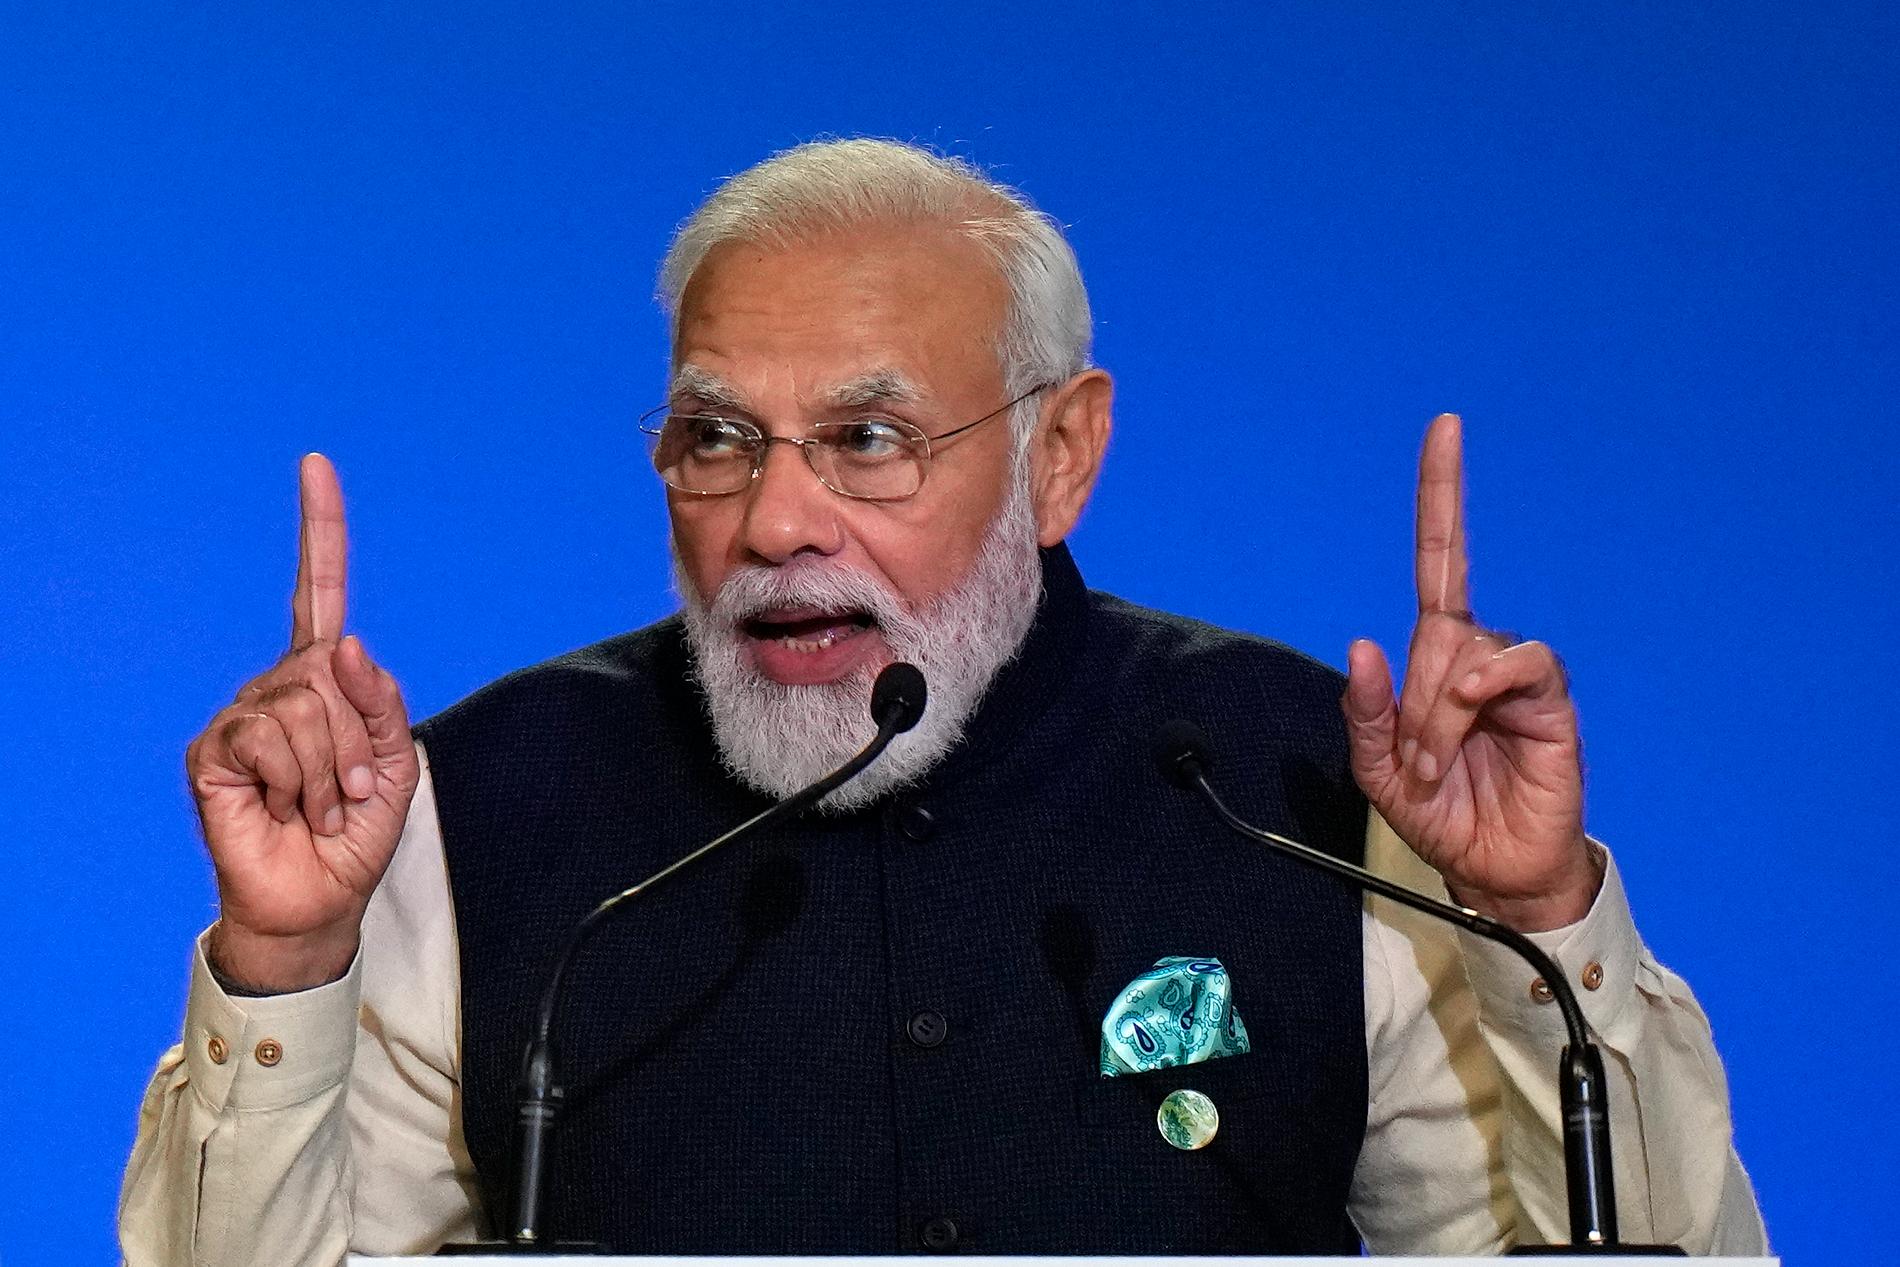 Indiens premiärminister Novandra Modi talar vid klimattoppmötet i Glasgow.